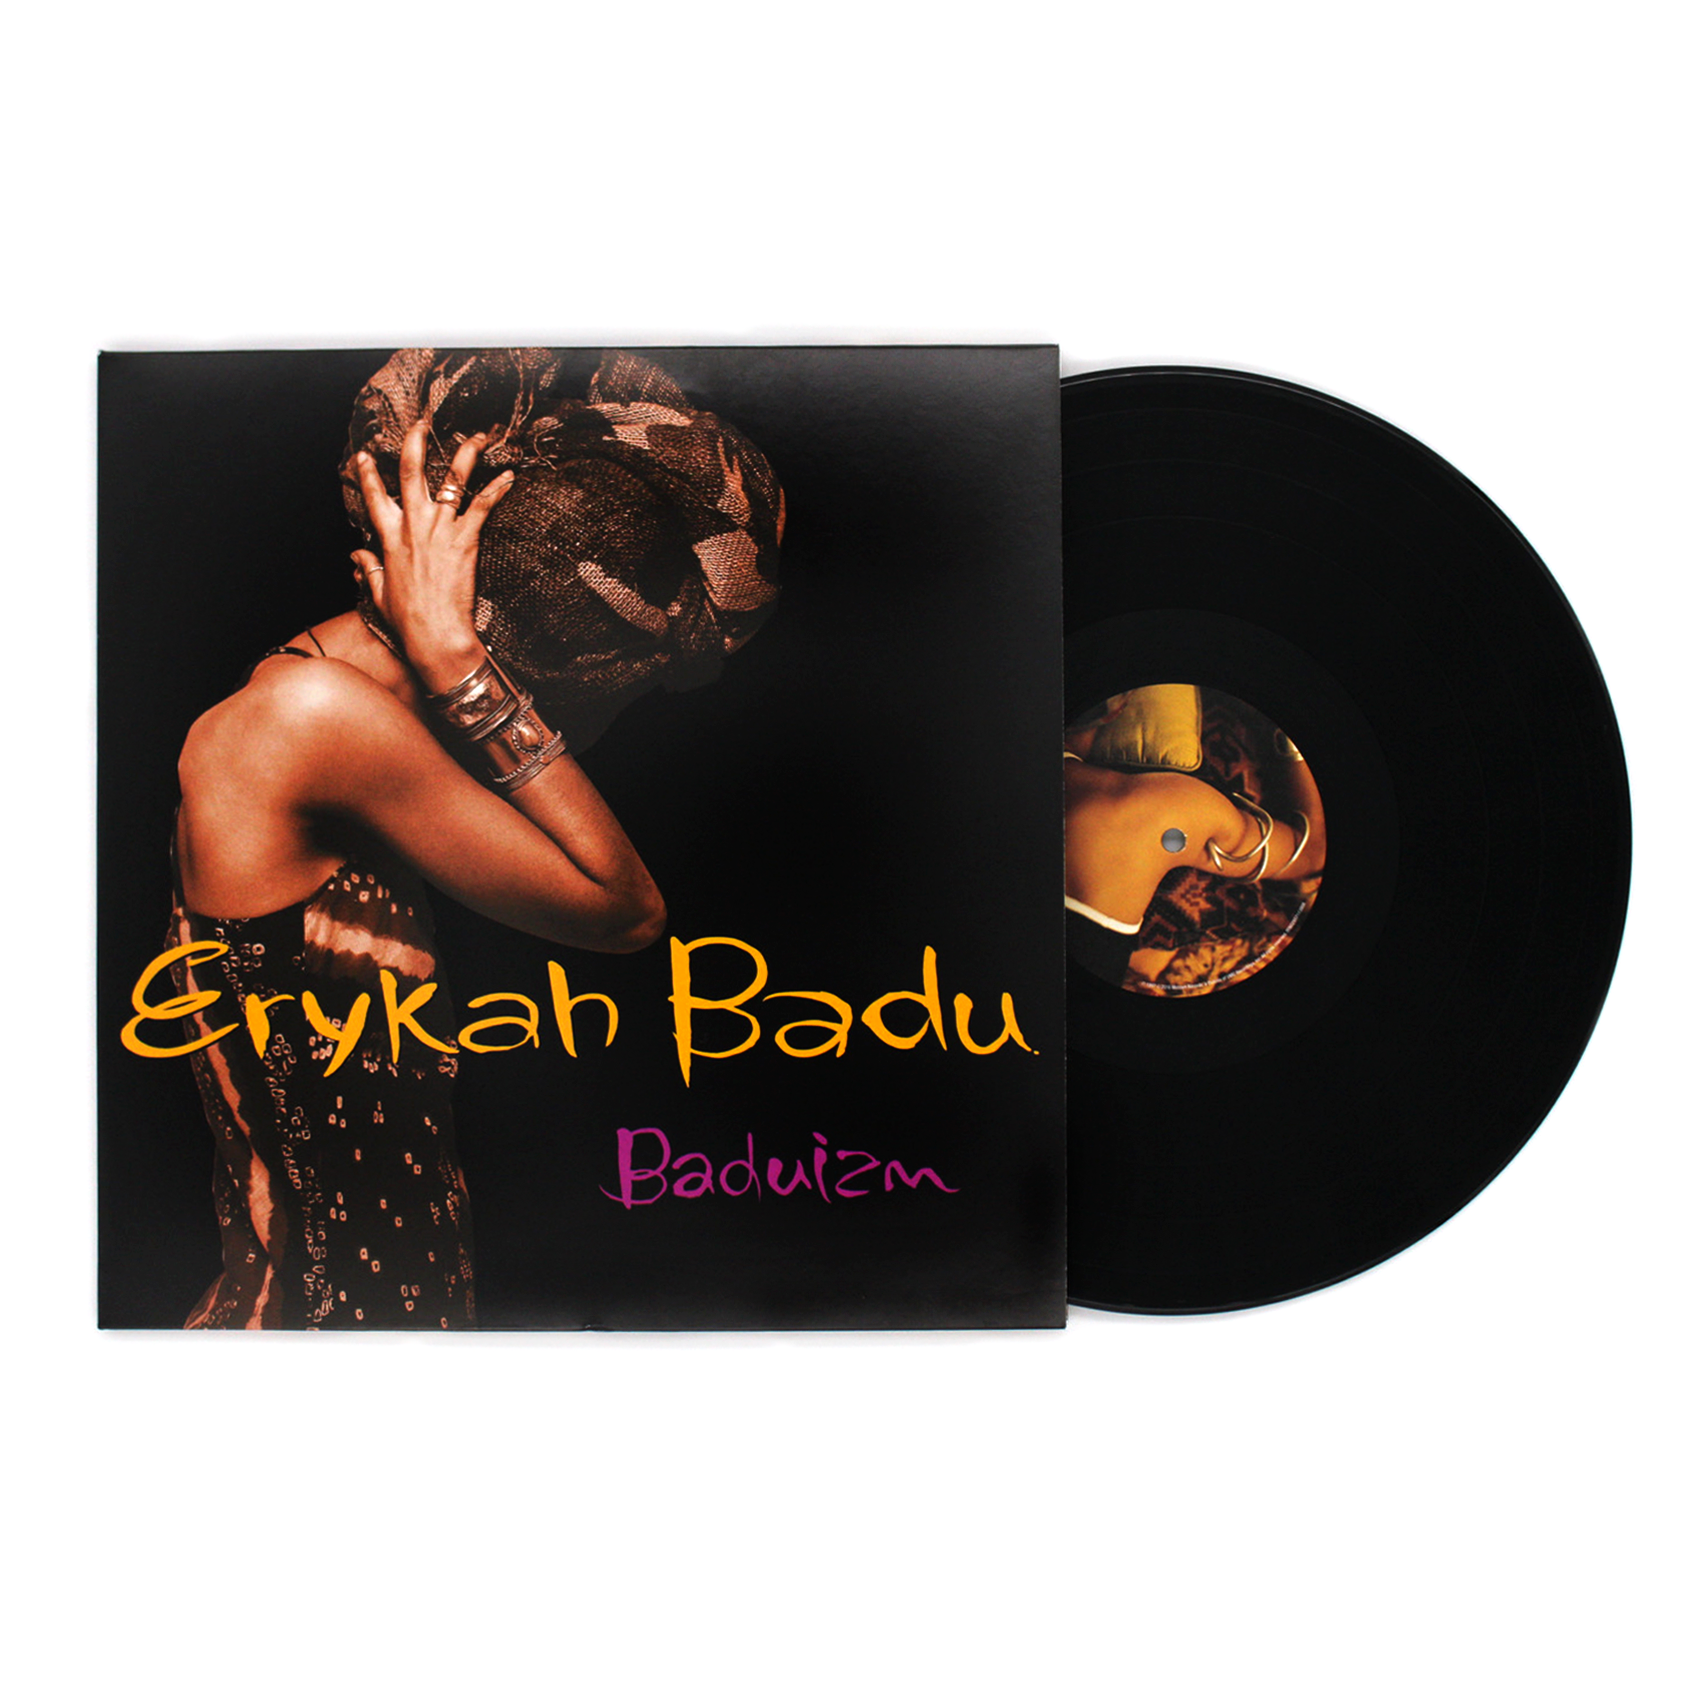 Album artwork for Album artwork for Baduizm by Erykah Badu by Baduizm - Erykah Badu